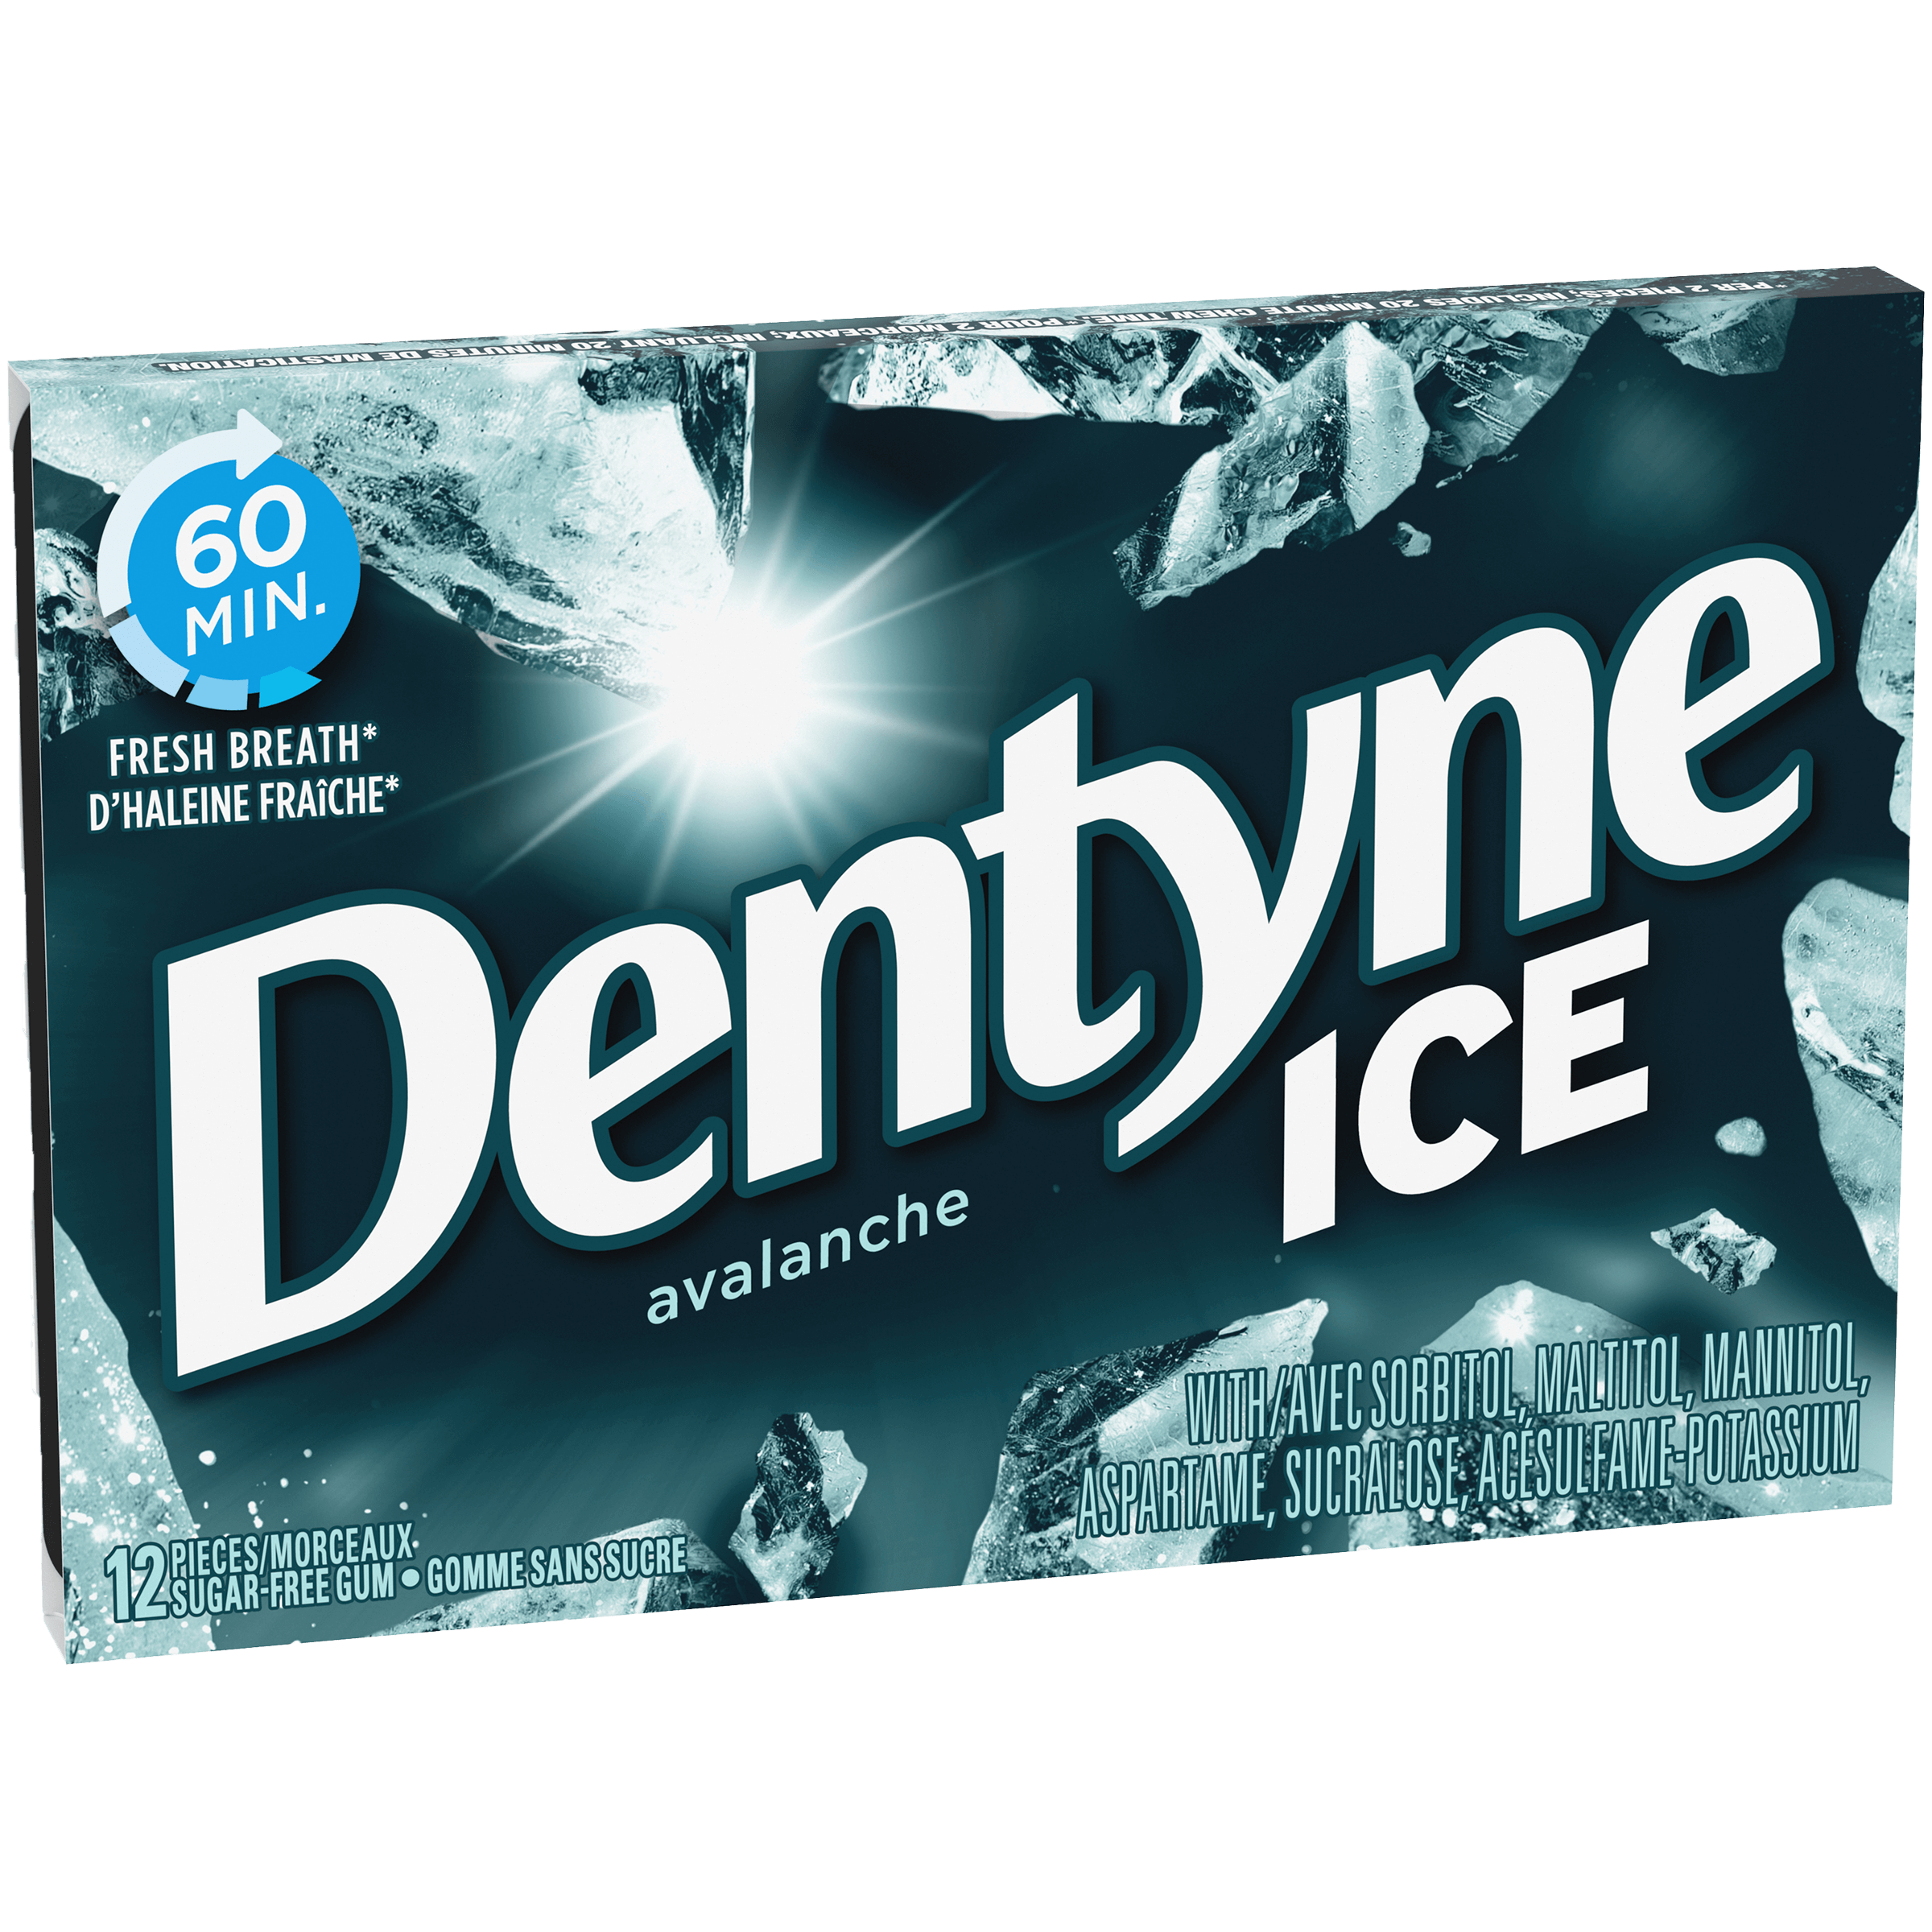 Dentyne ICE Avalanche